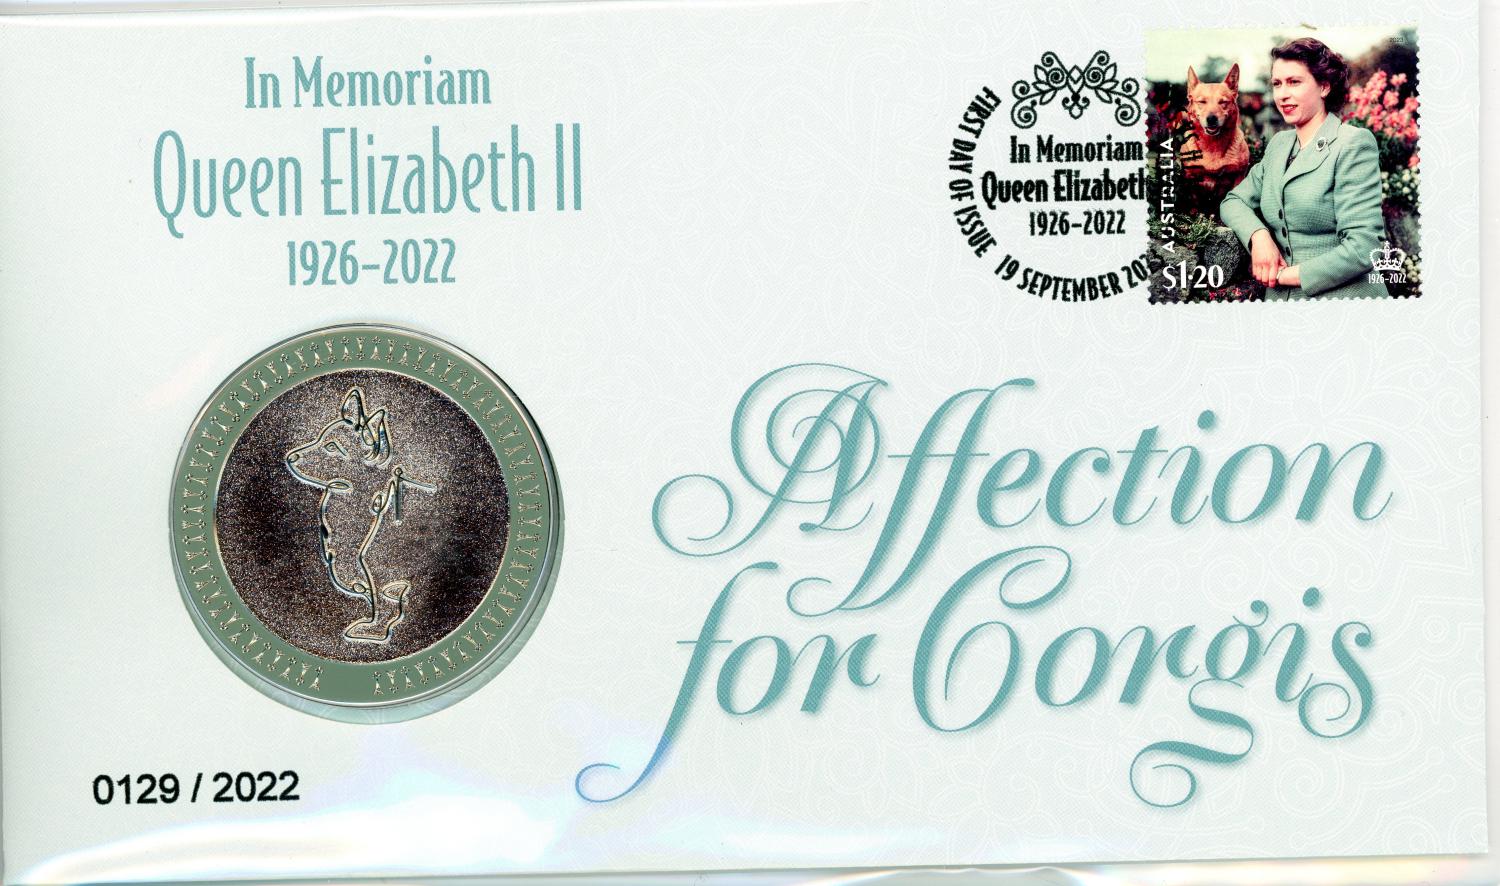 Thumbnail for 2023 In Memoriam Queen Elizabeth II 1926 - 2022 Affection for Corgis Postal Medallion Cover